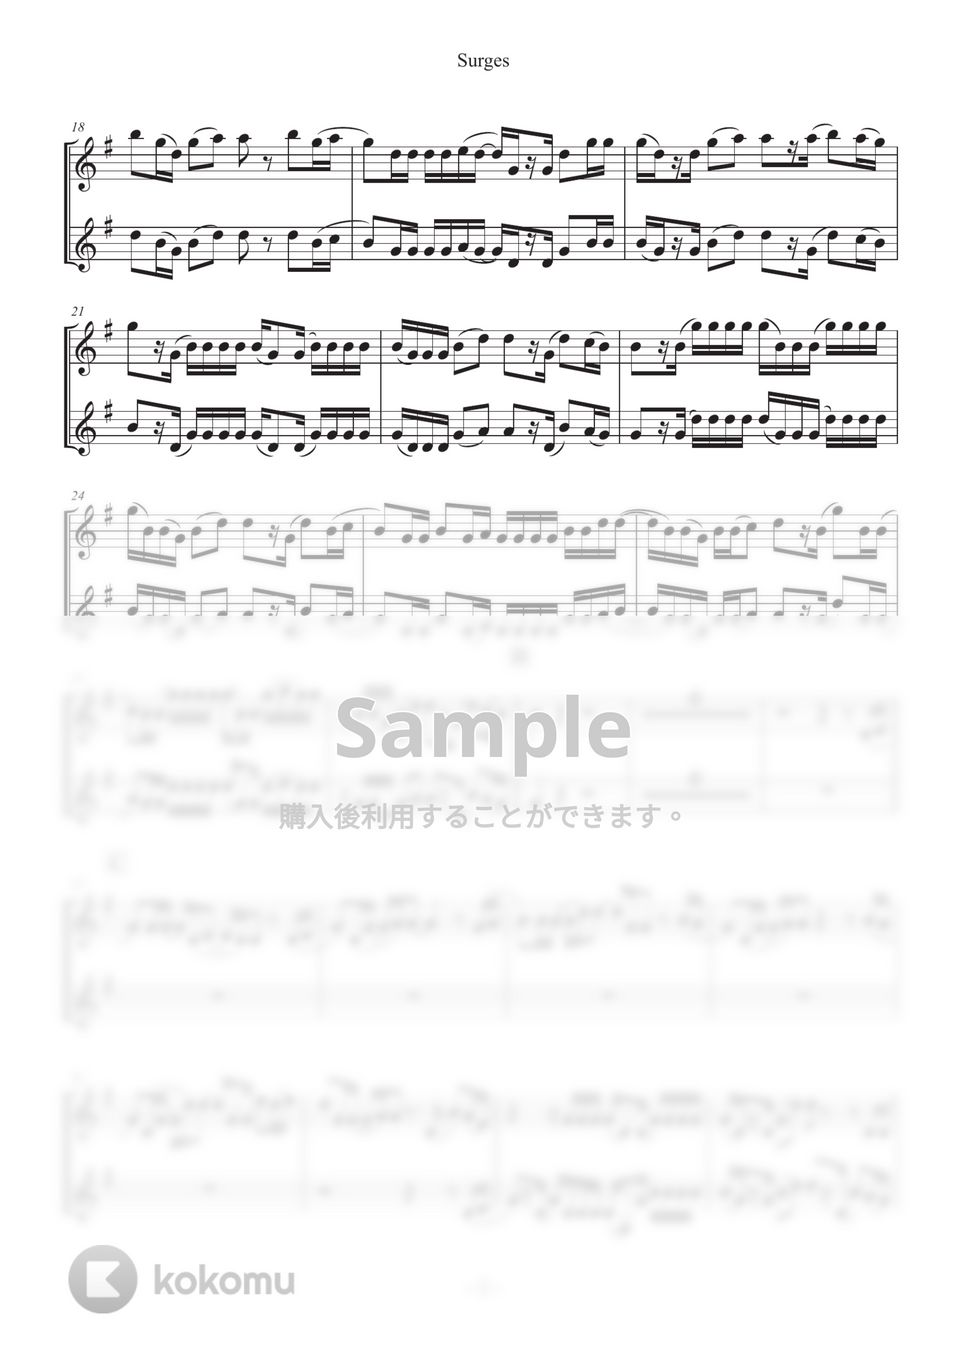 Orangestar - Surges (クラリネット二重奏) by SHUN&NANA Daily Clarinets!